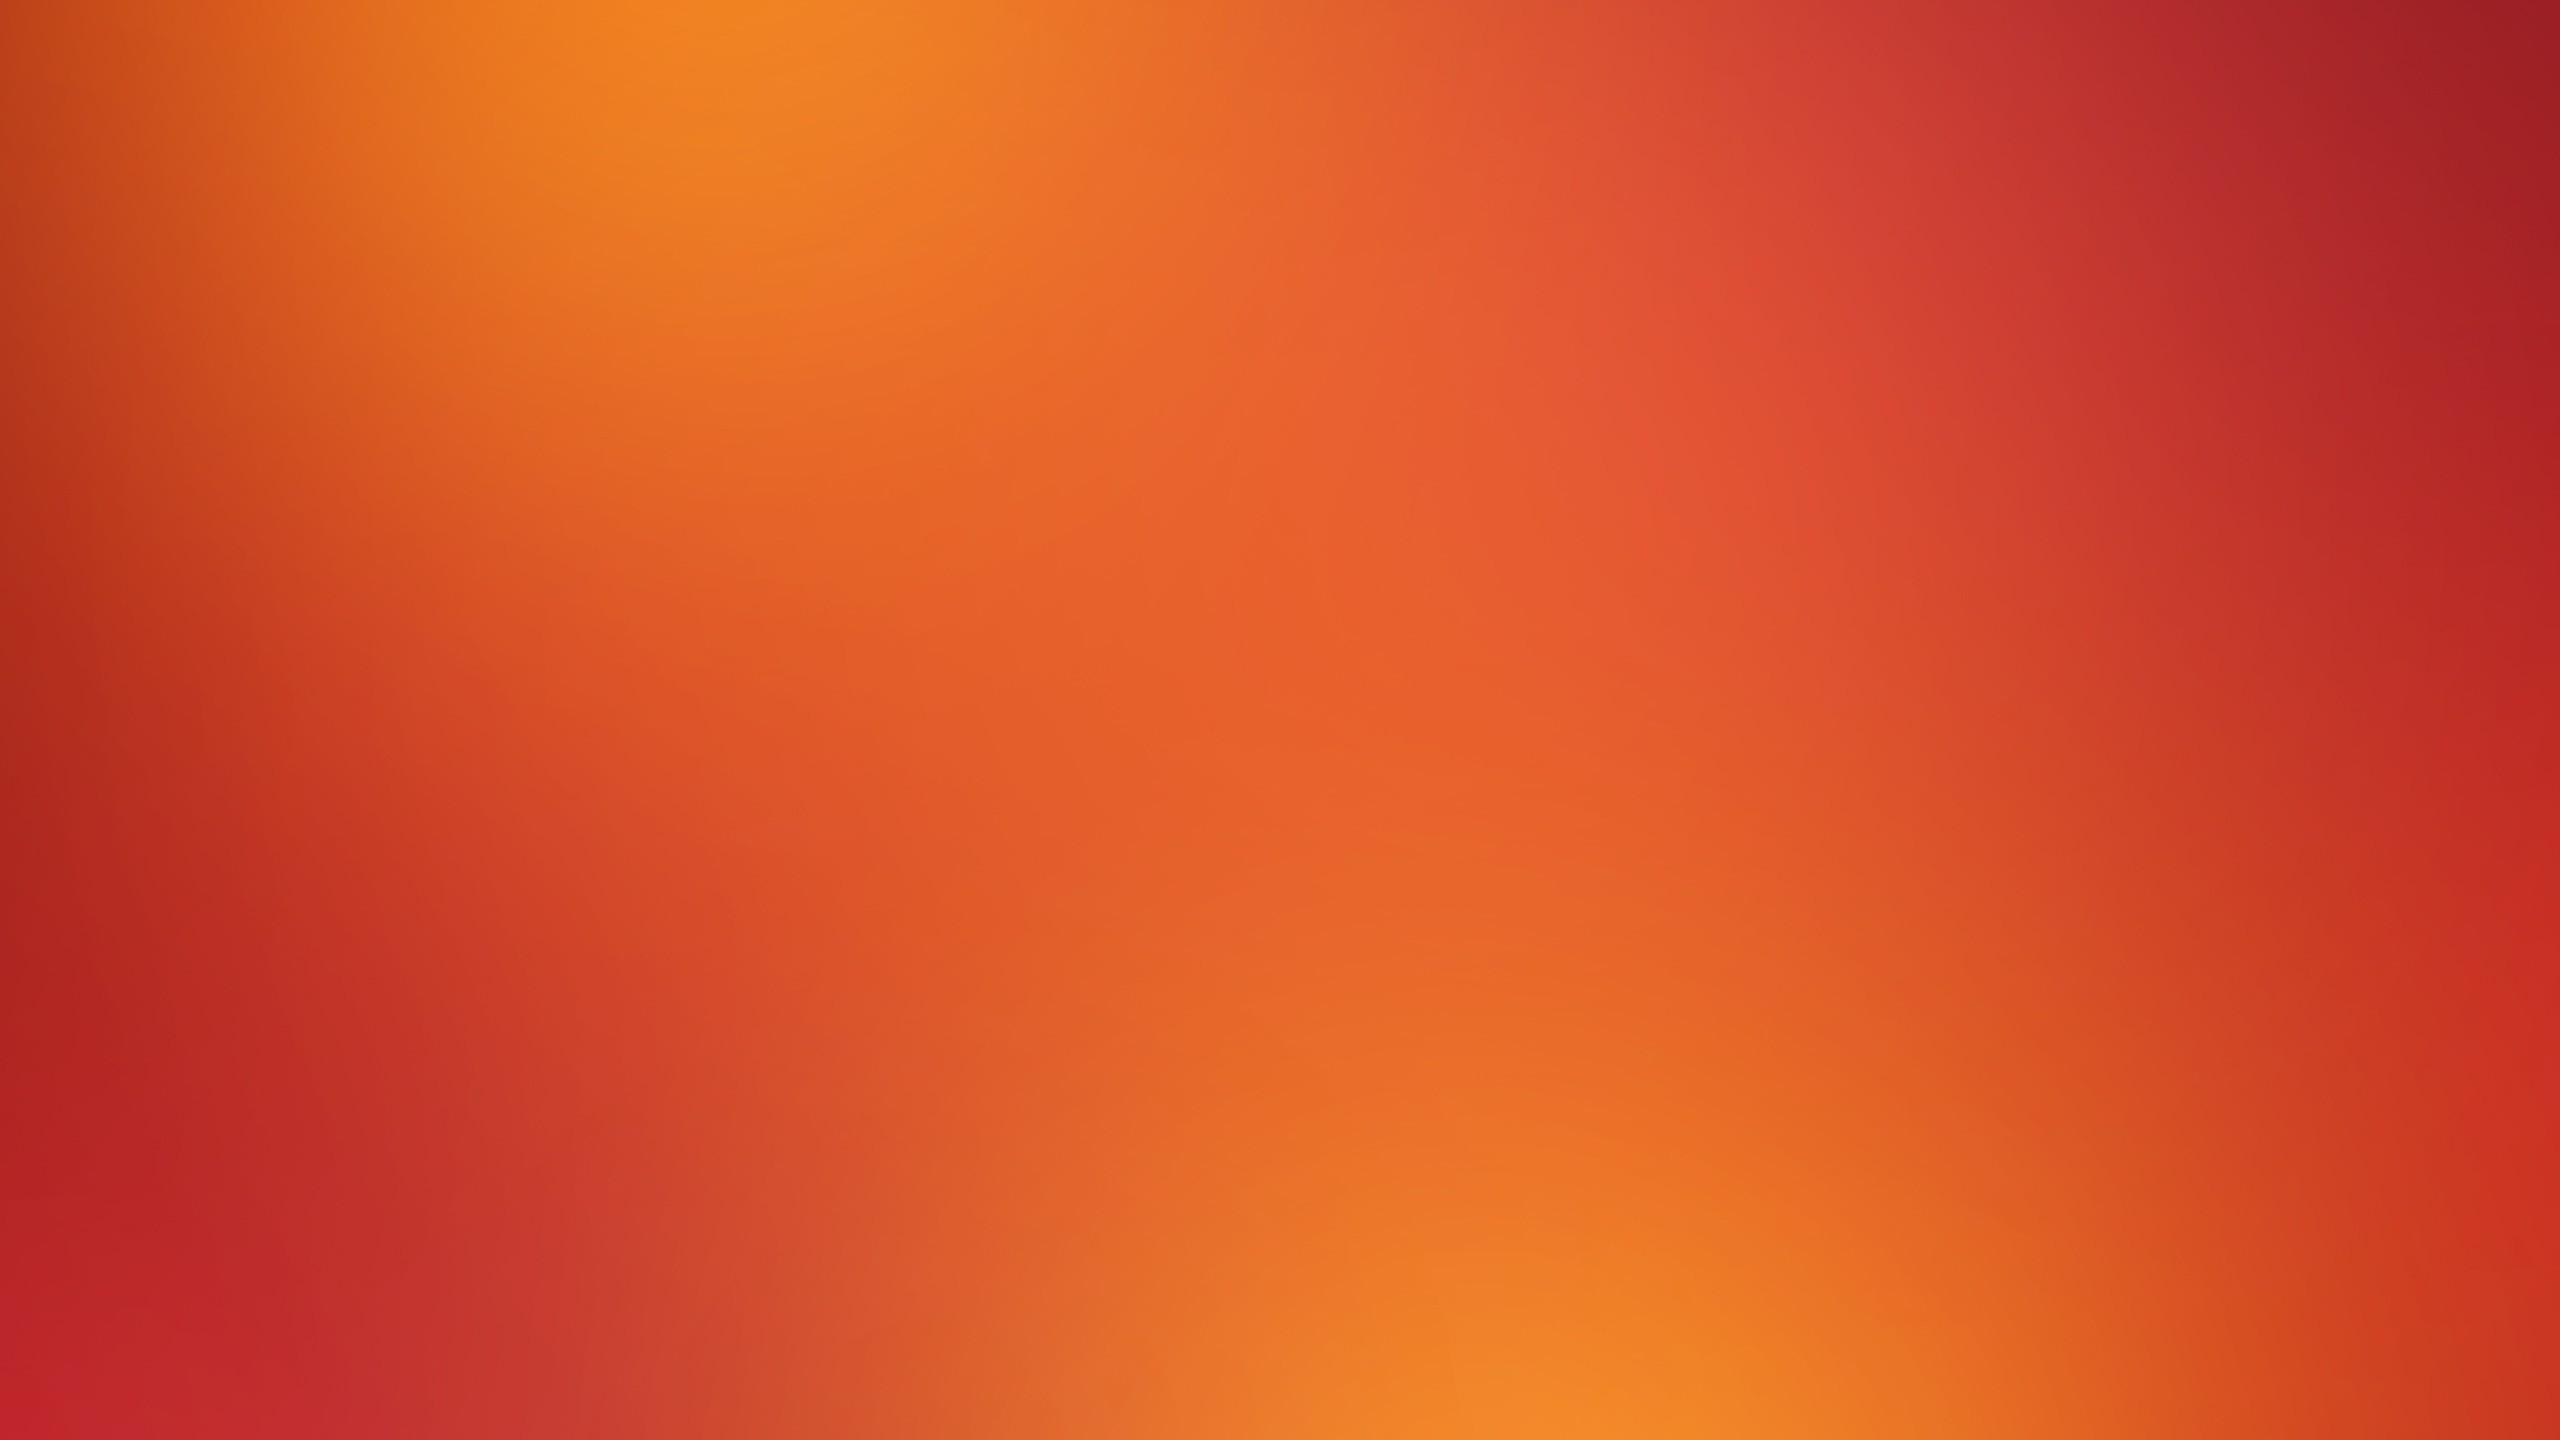 Red Orange Background Images  Free Download on Freepik